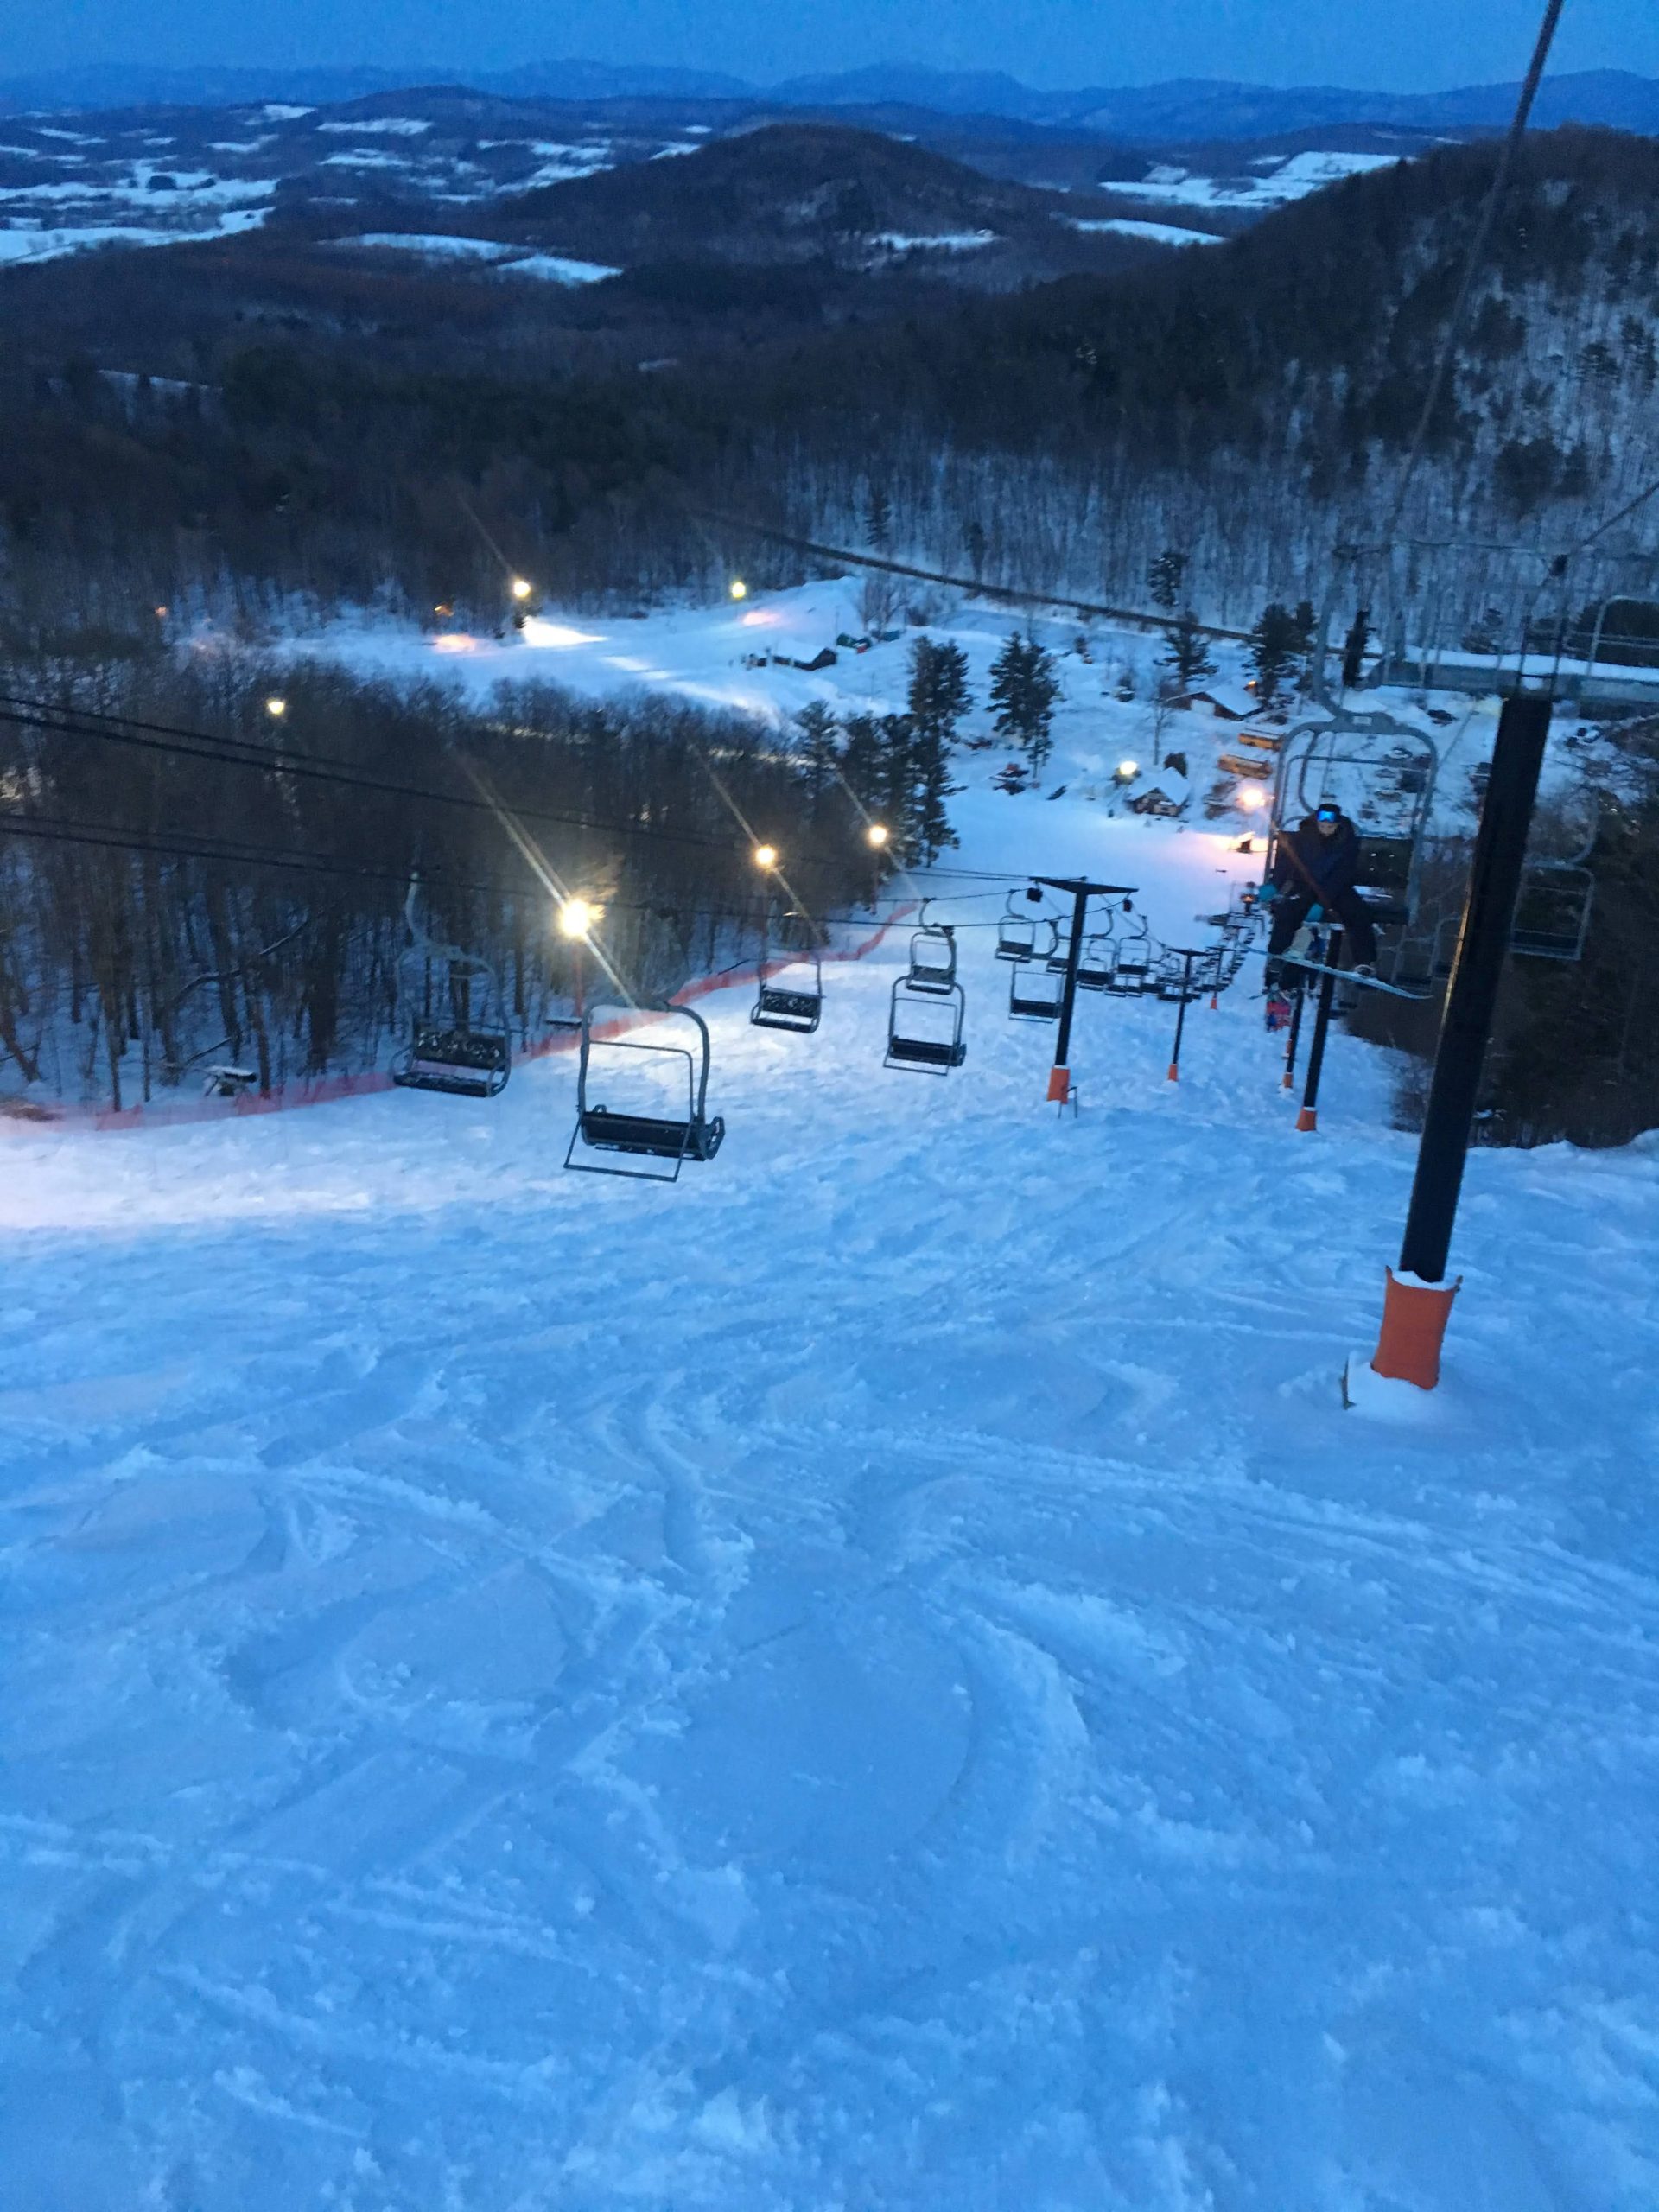 Quiet night skiing at Willard